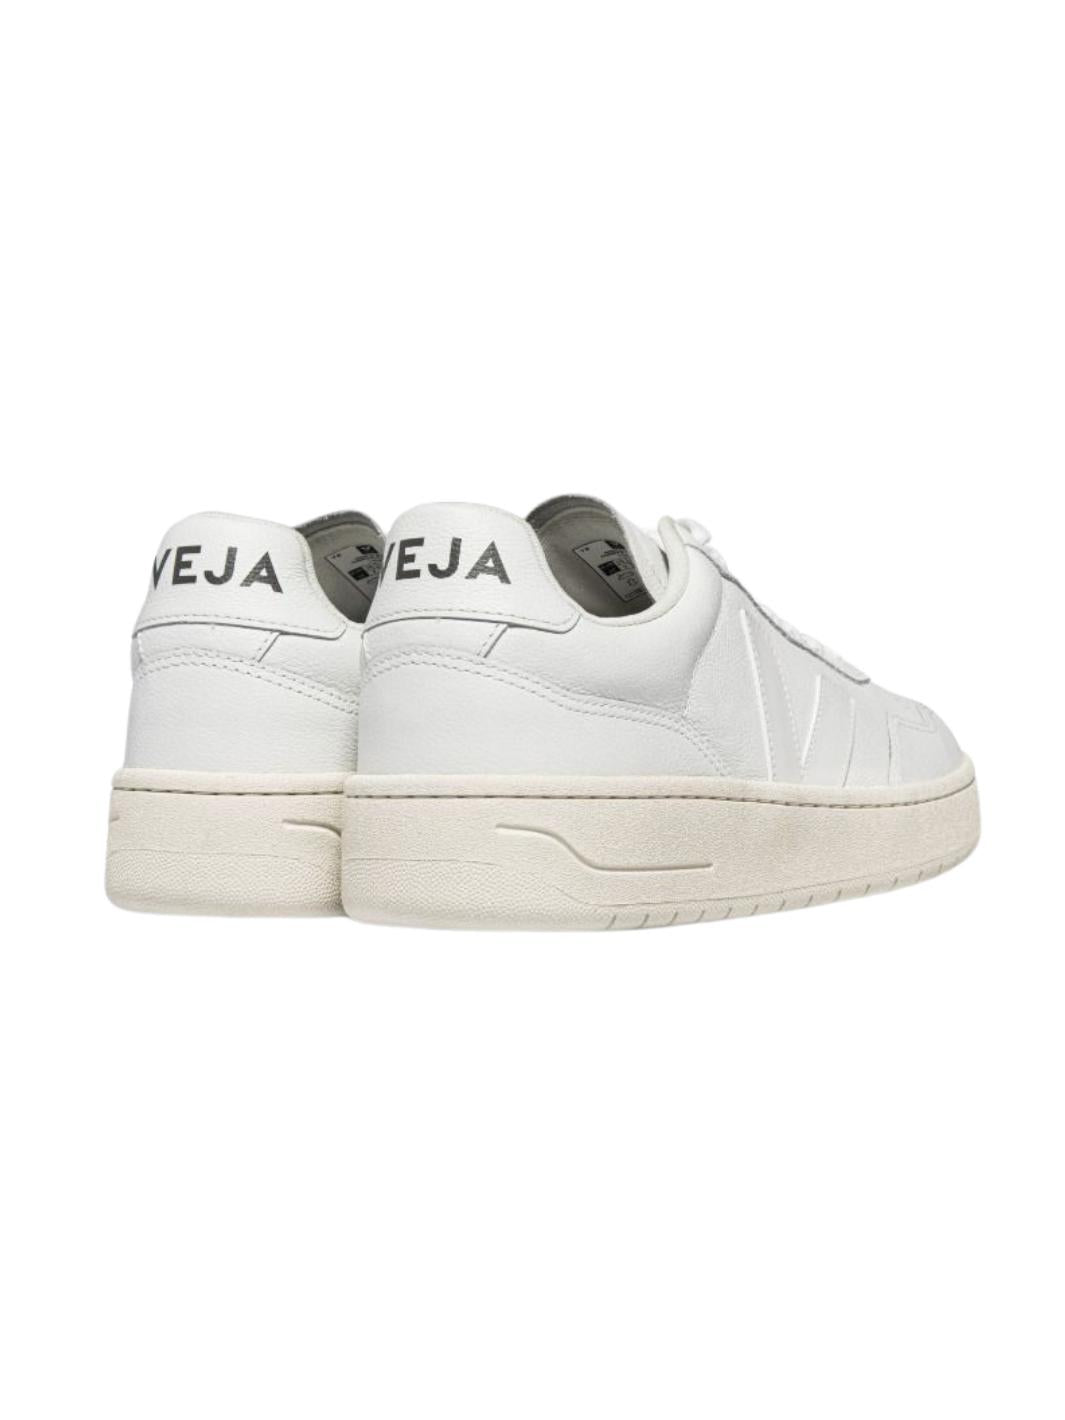 Veja Shoes Sneakers | V-90 Extra White